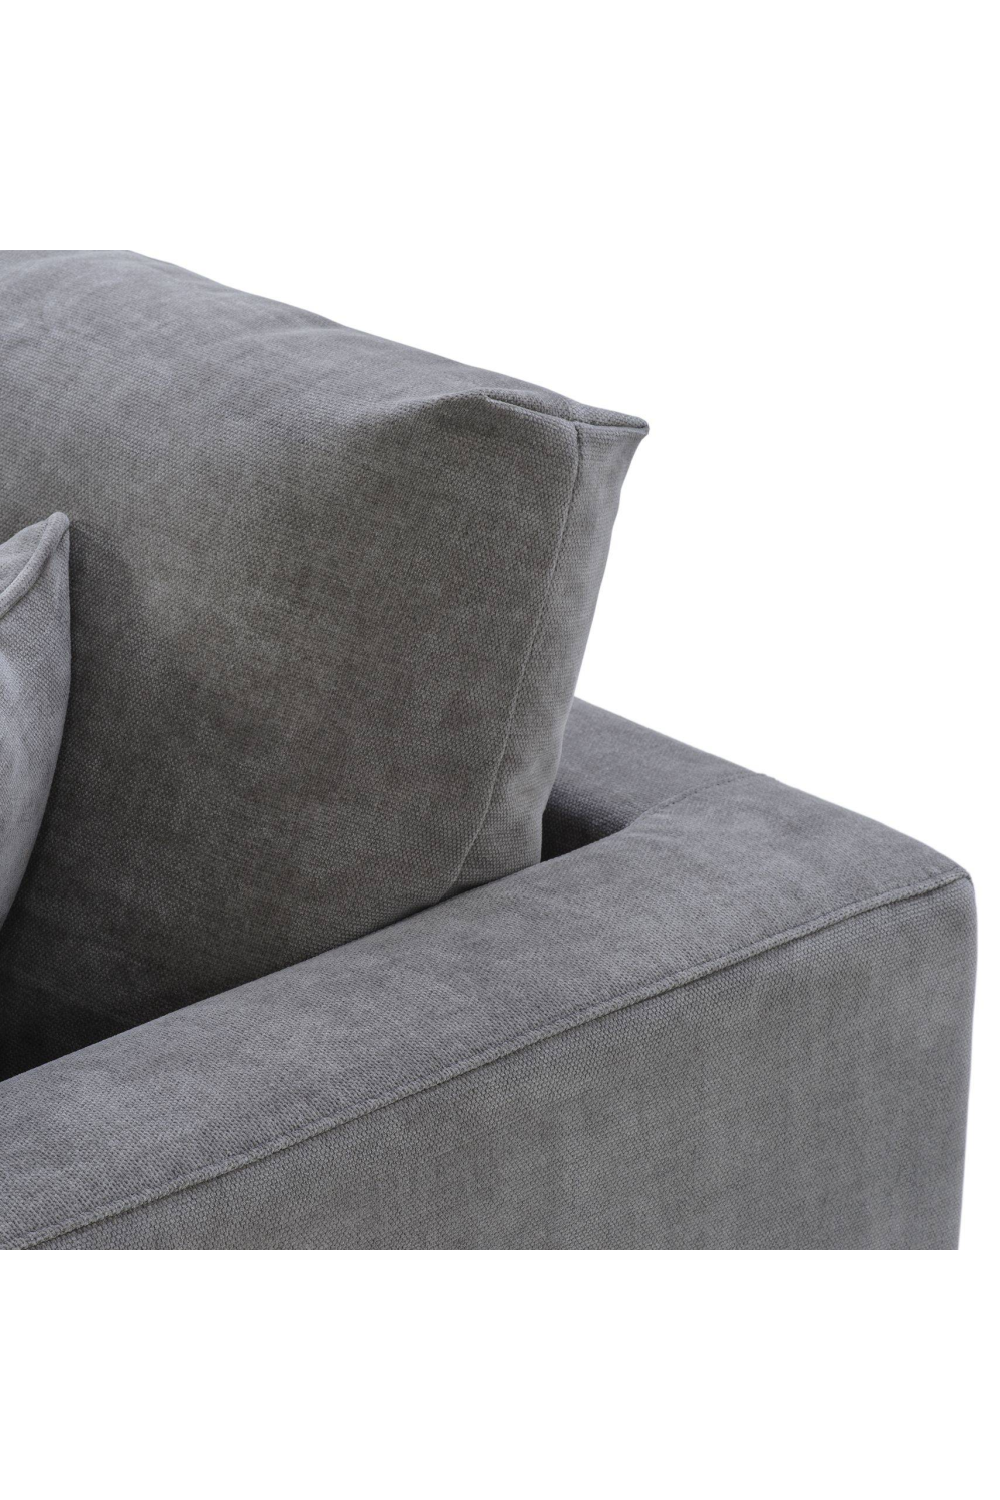 Fabric Modern Sofa | Eichholtz Tuscany | Oroa.com